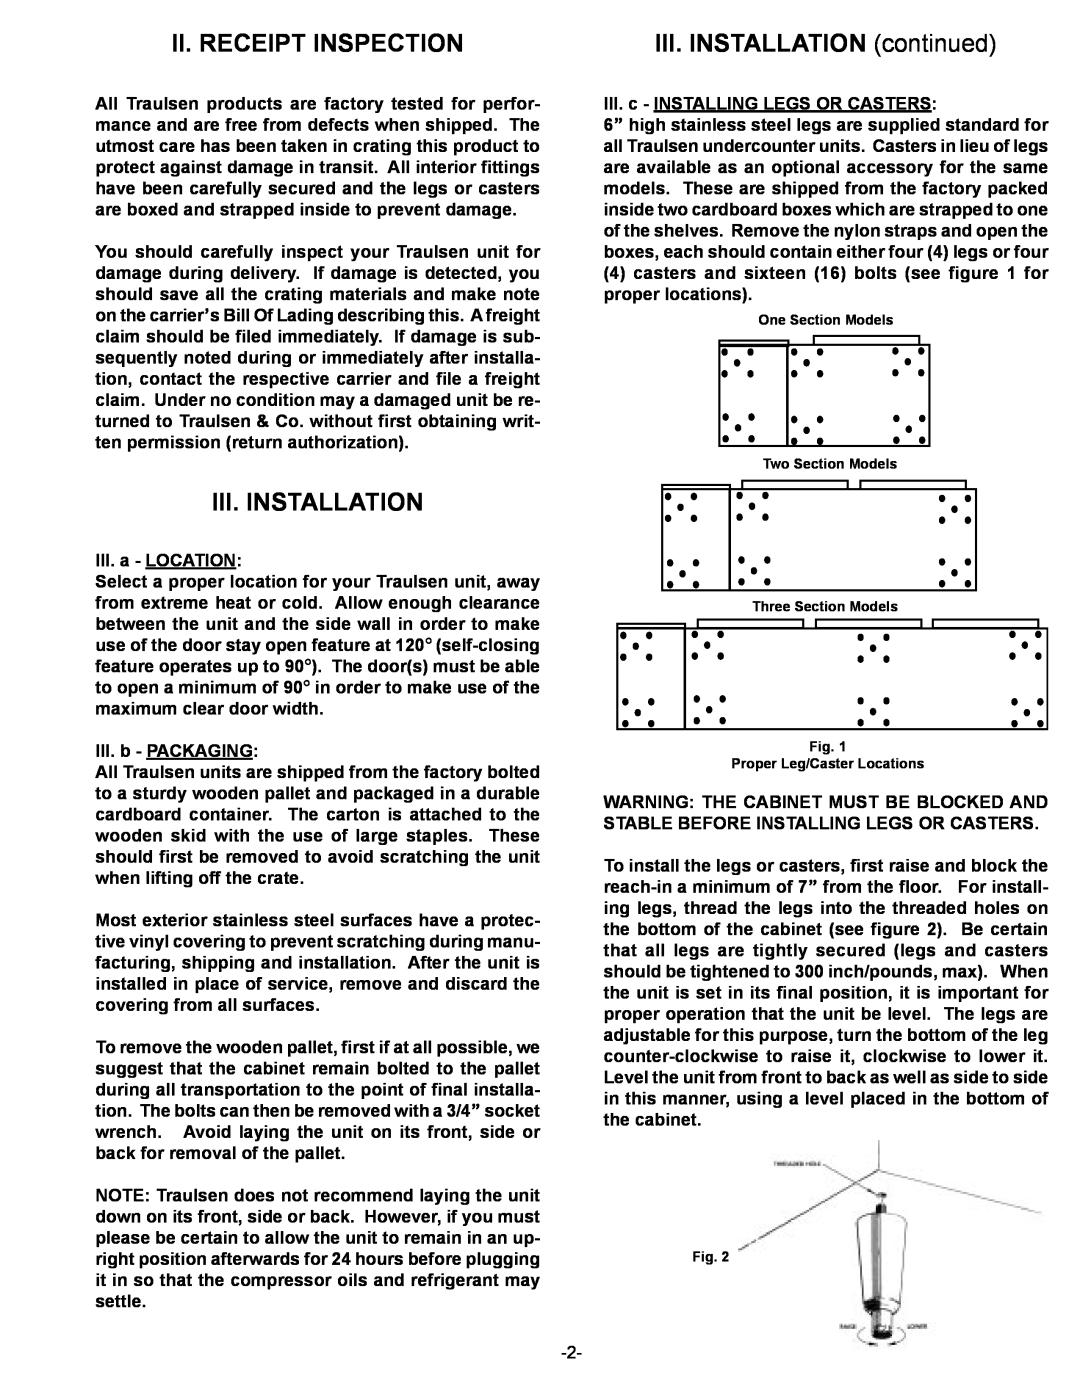 Traulsen UL Series, UC Series owner manual Ii. Receipt Inspection, Iii. Installation, III. INSTALLATION continued 